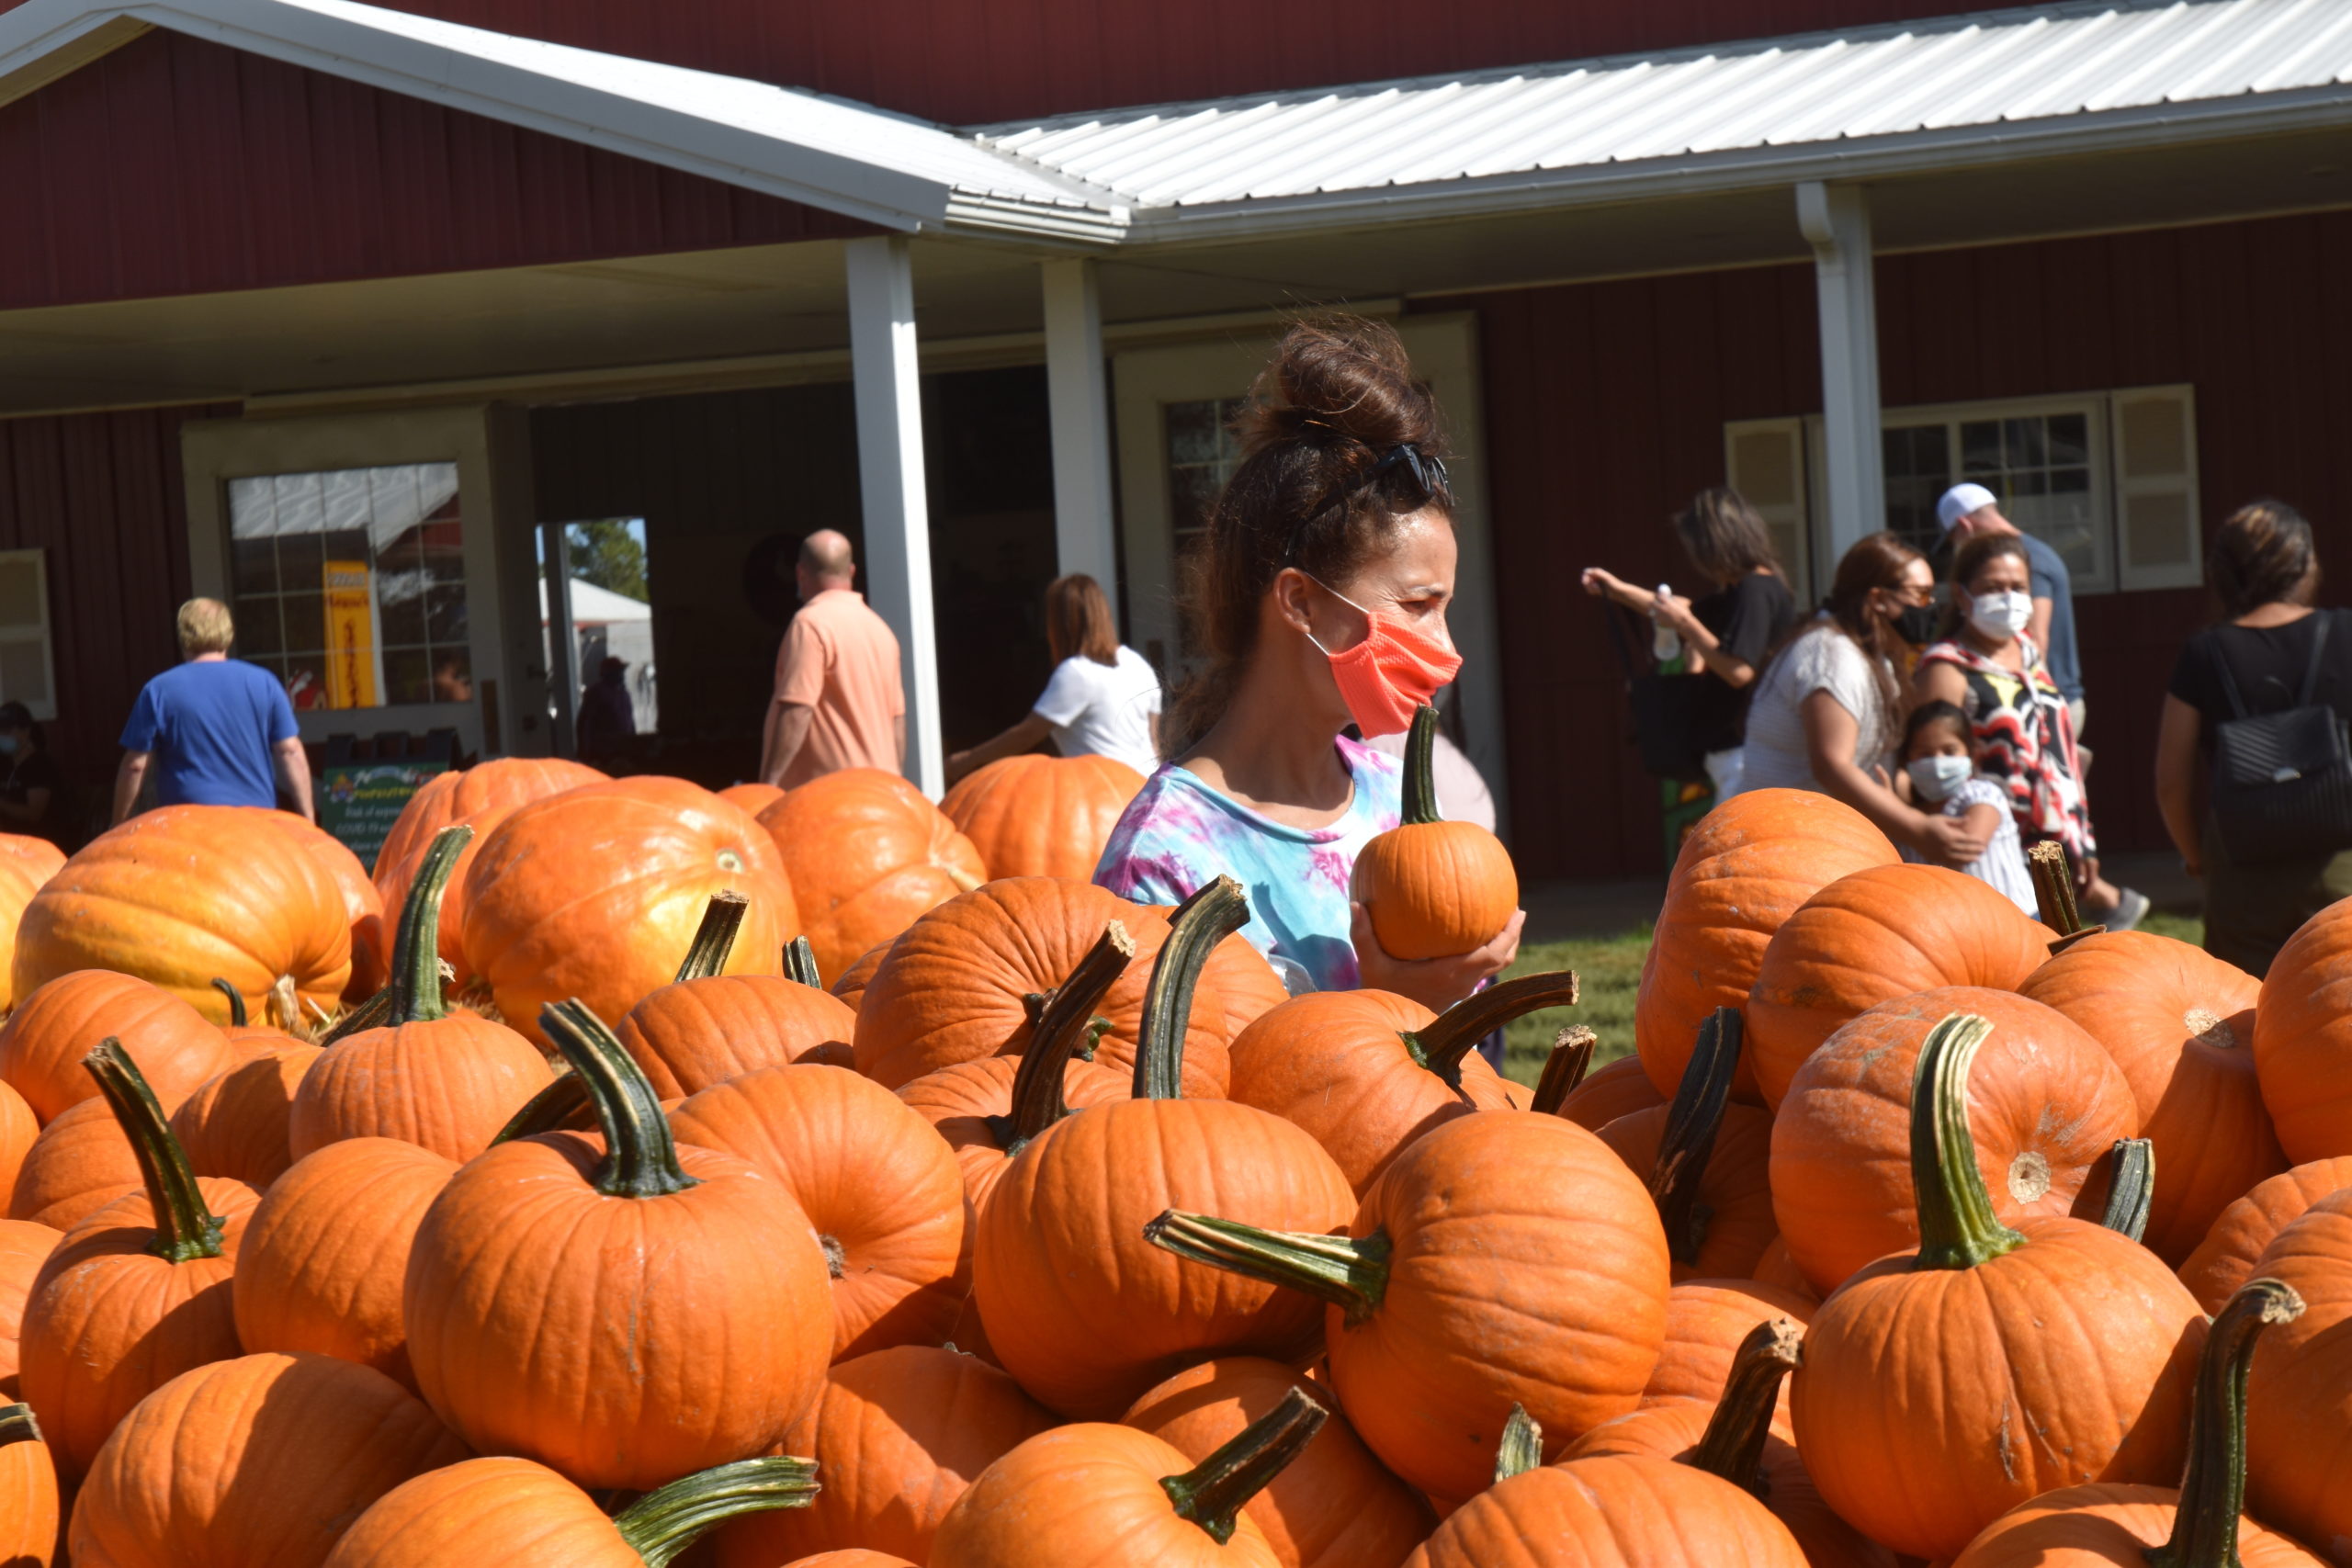 A woman selects a pumpkin at Hank's PumpkinTown in Water Mill on Sunday. STEPHEN J. KOTZ